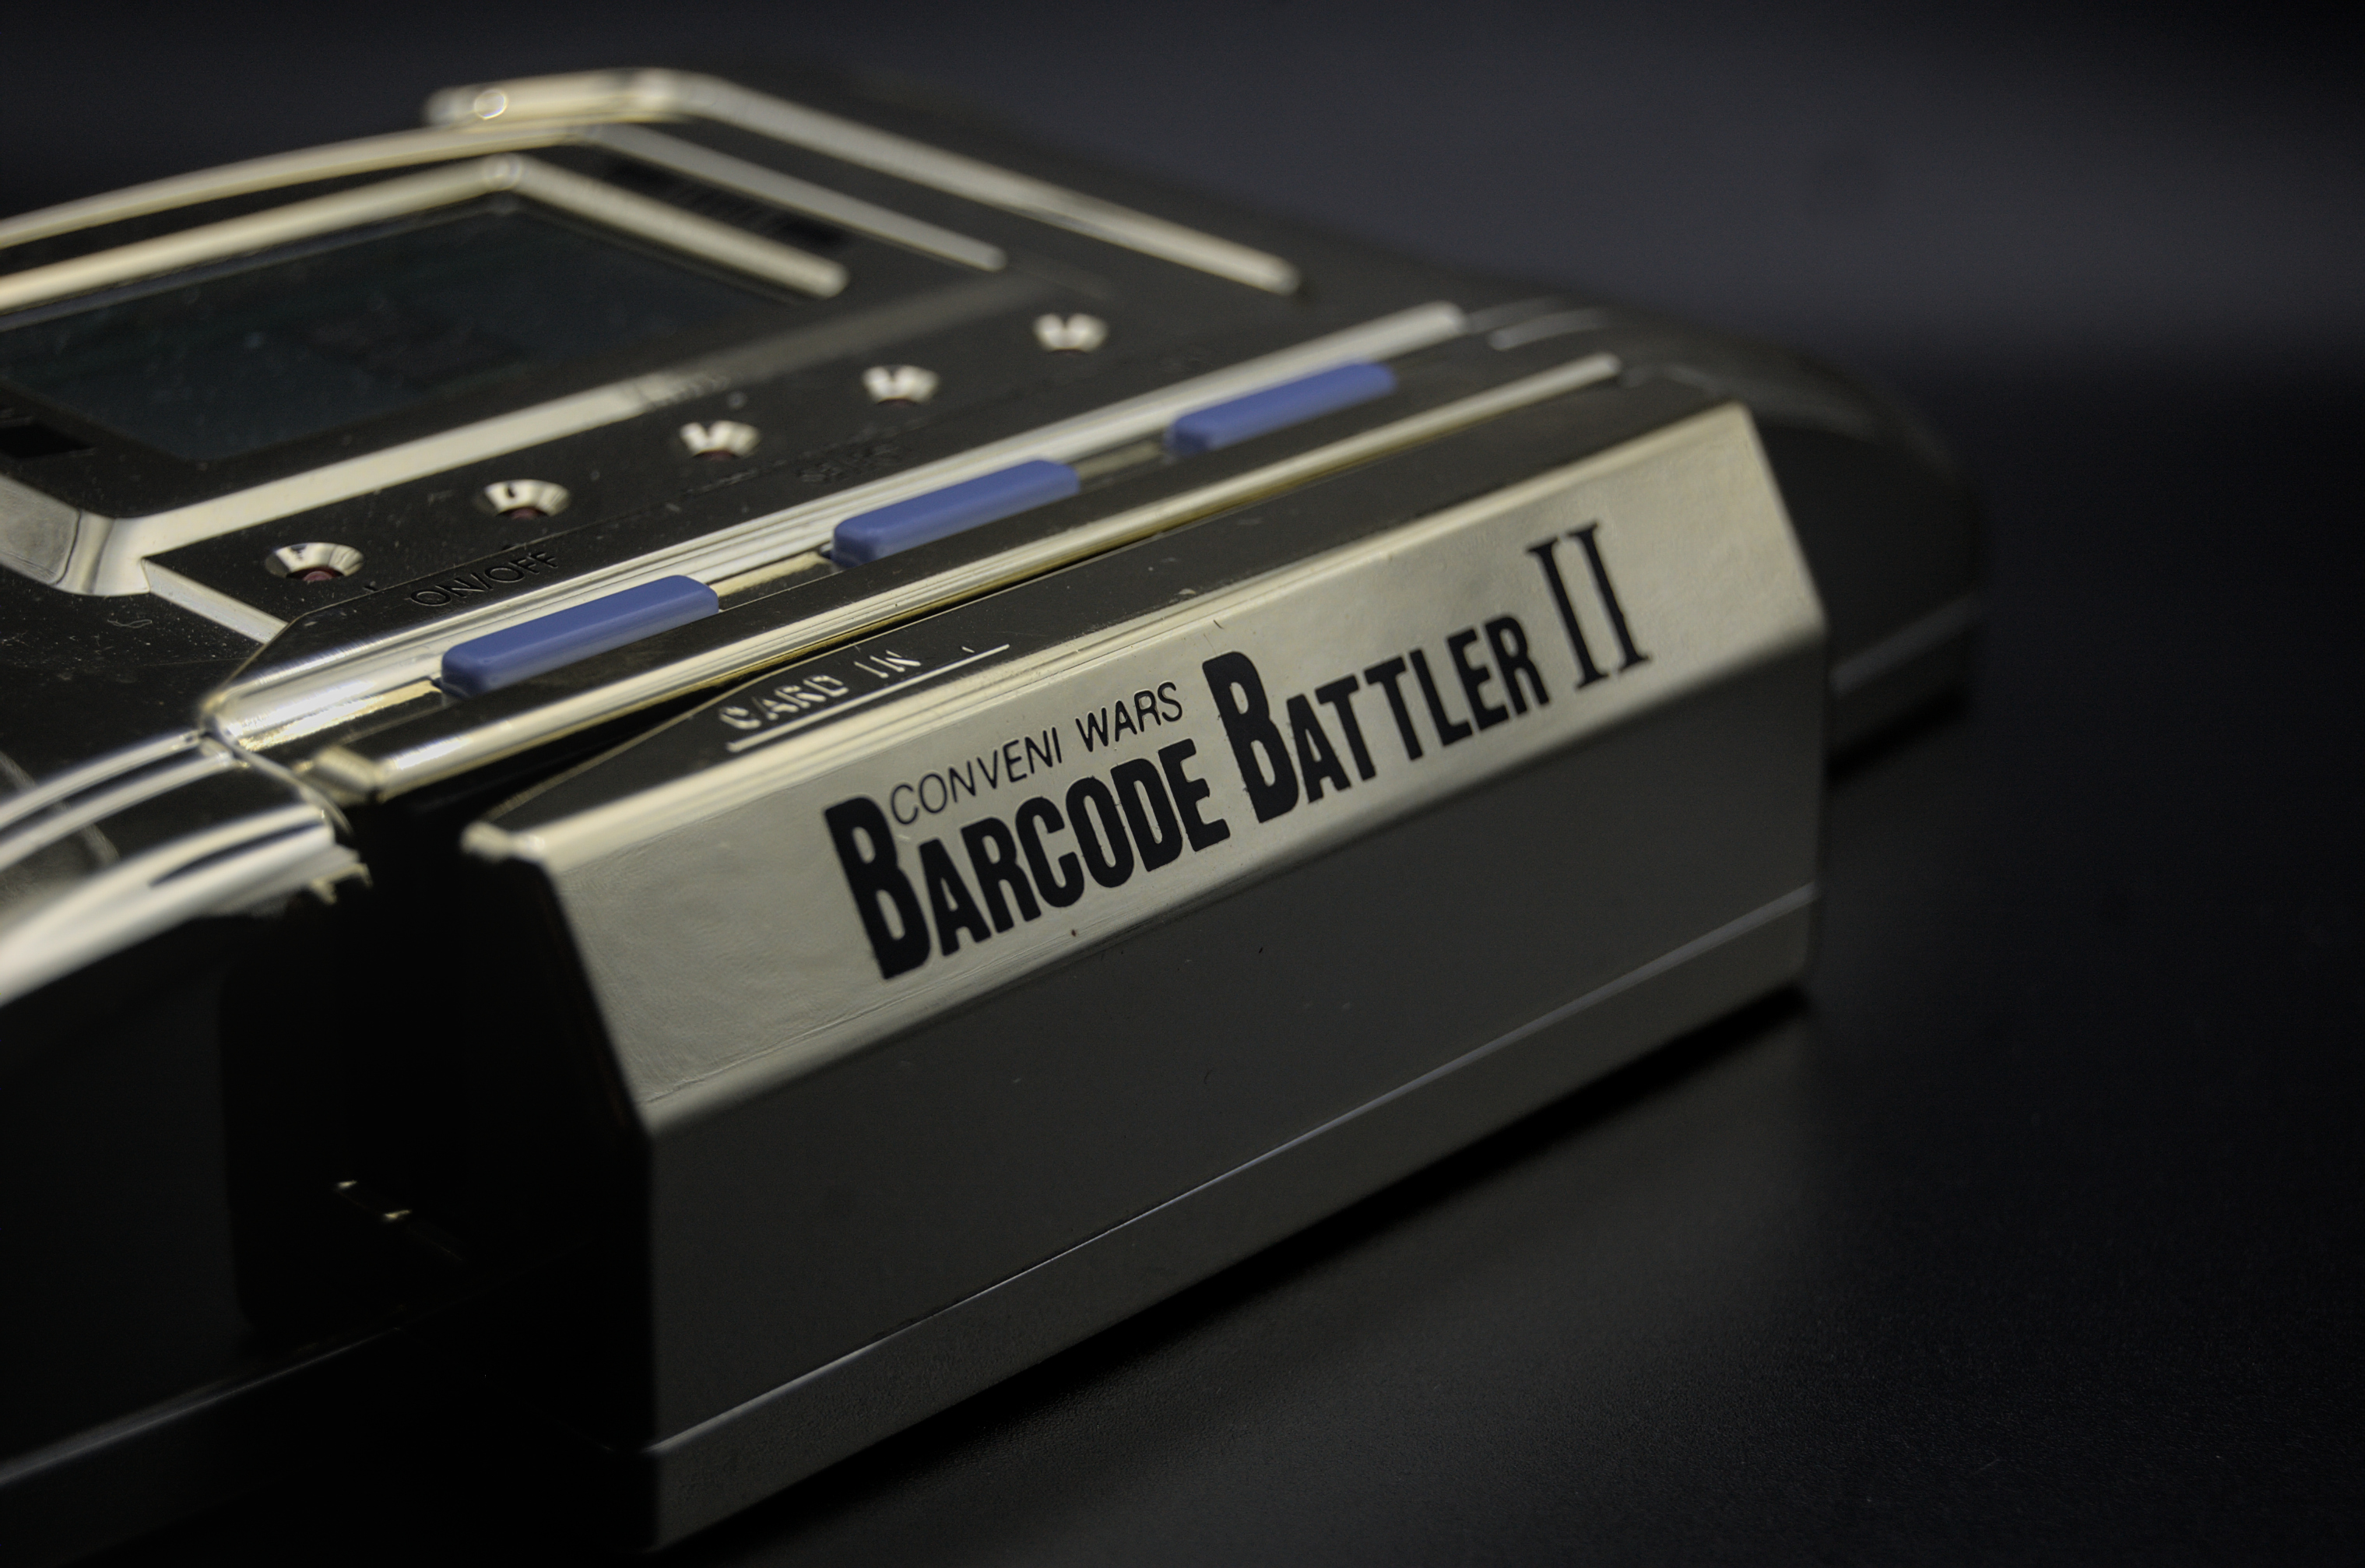 Detalle de la edición dorada de Barcode Battler II